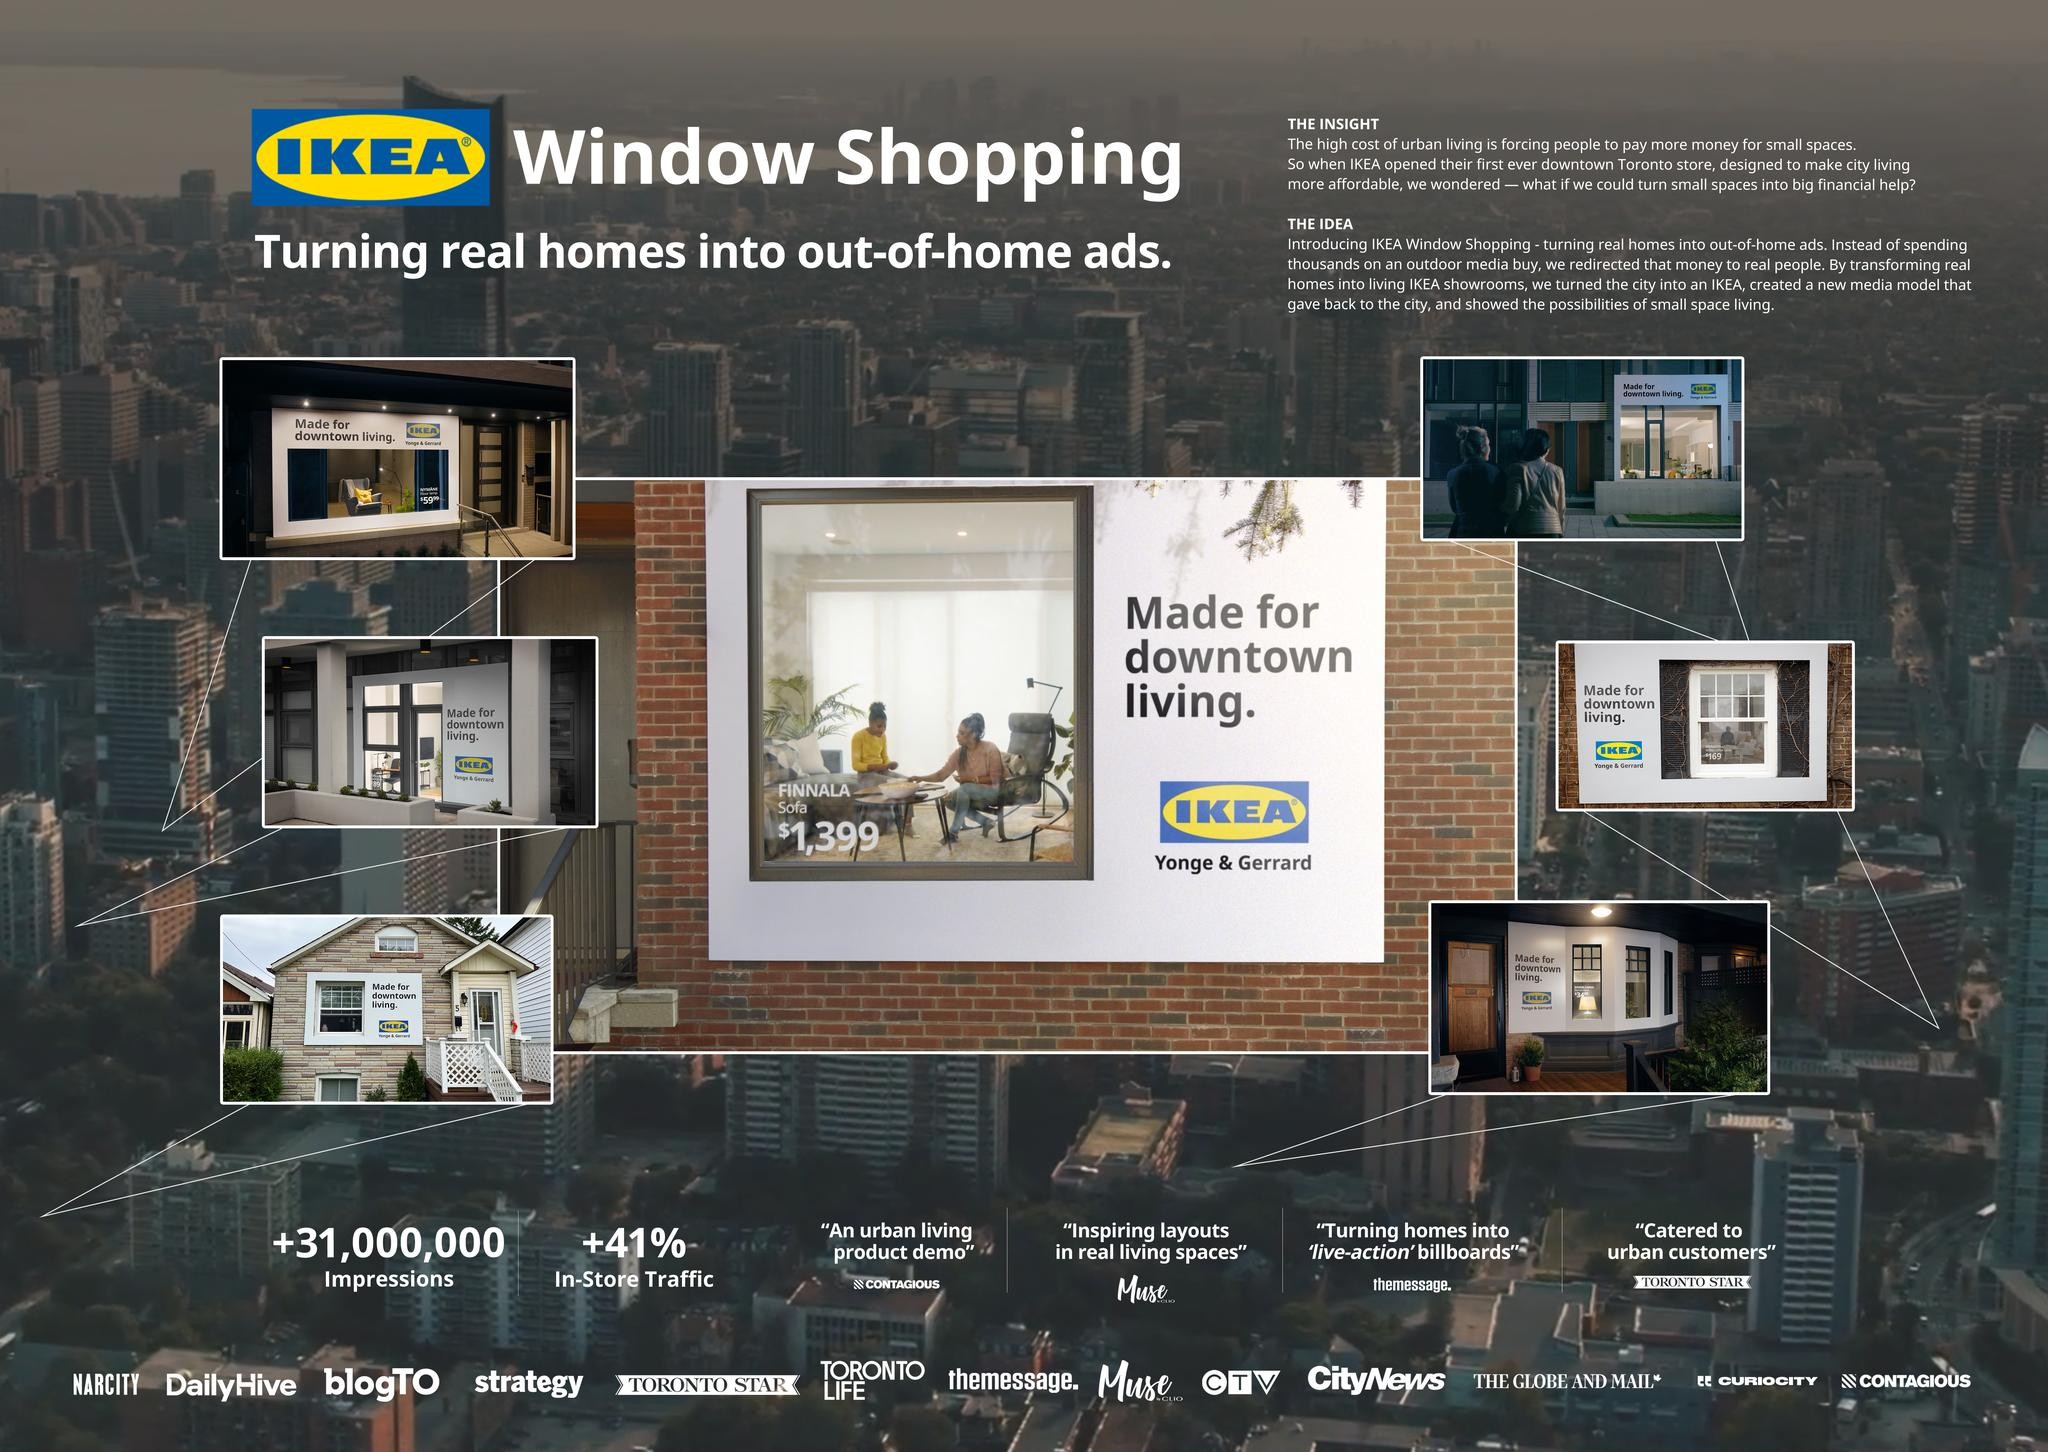 IKEA WINDOW SHOPPING